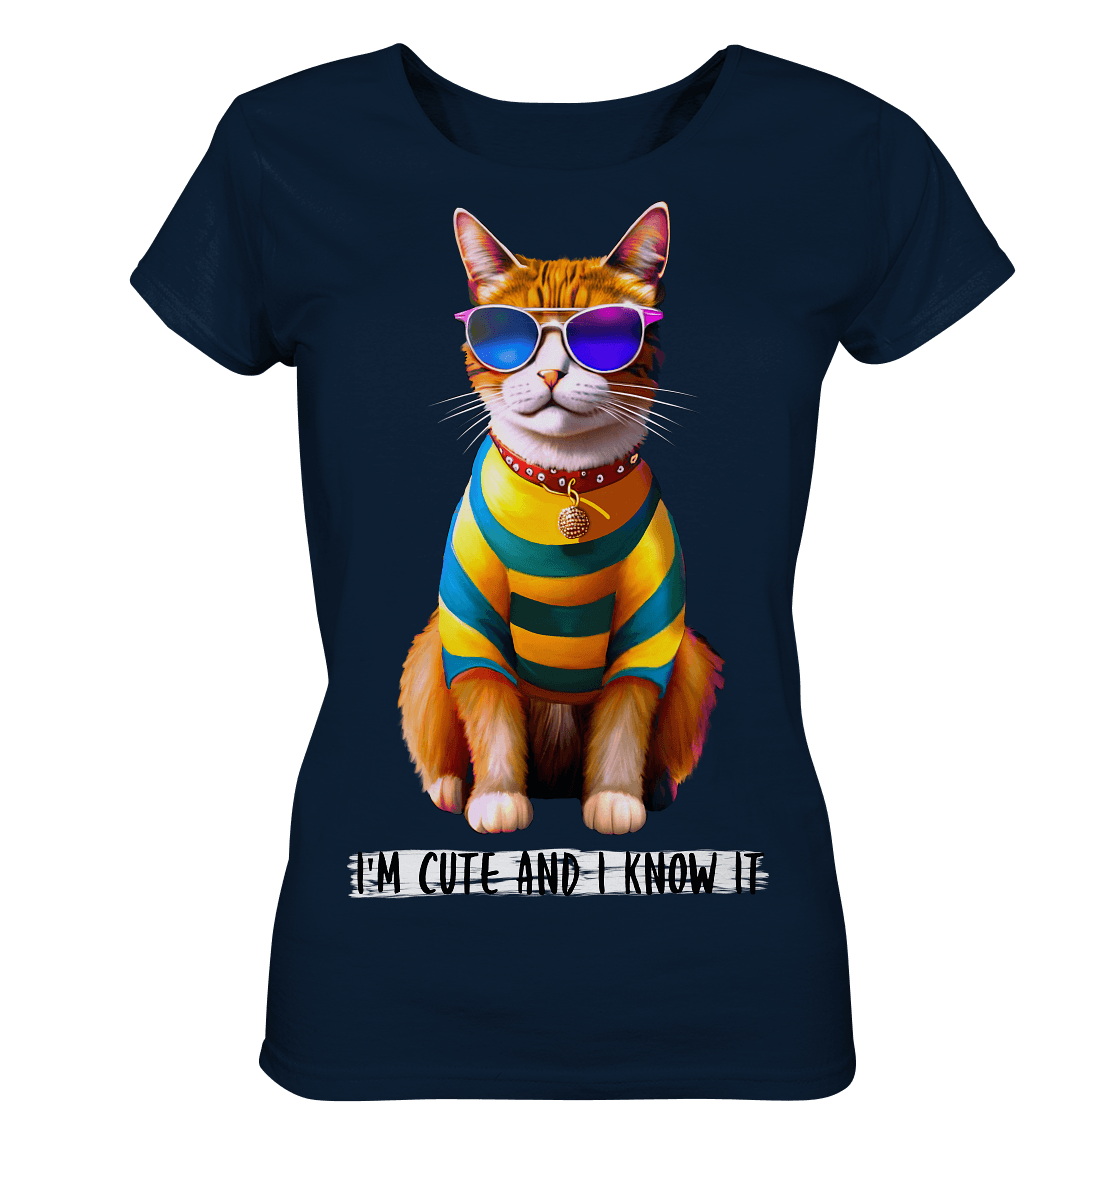 Katzen-T-Shirt-I-m-cute-and-I-know-it-Katzenprint-Shirt-in-navy